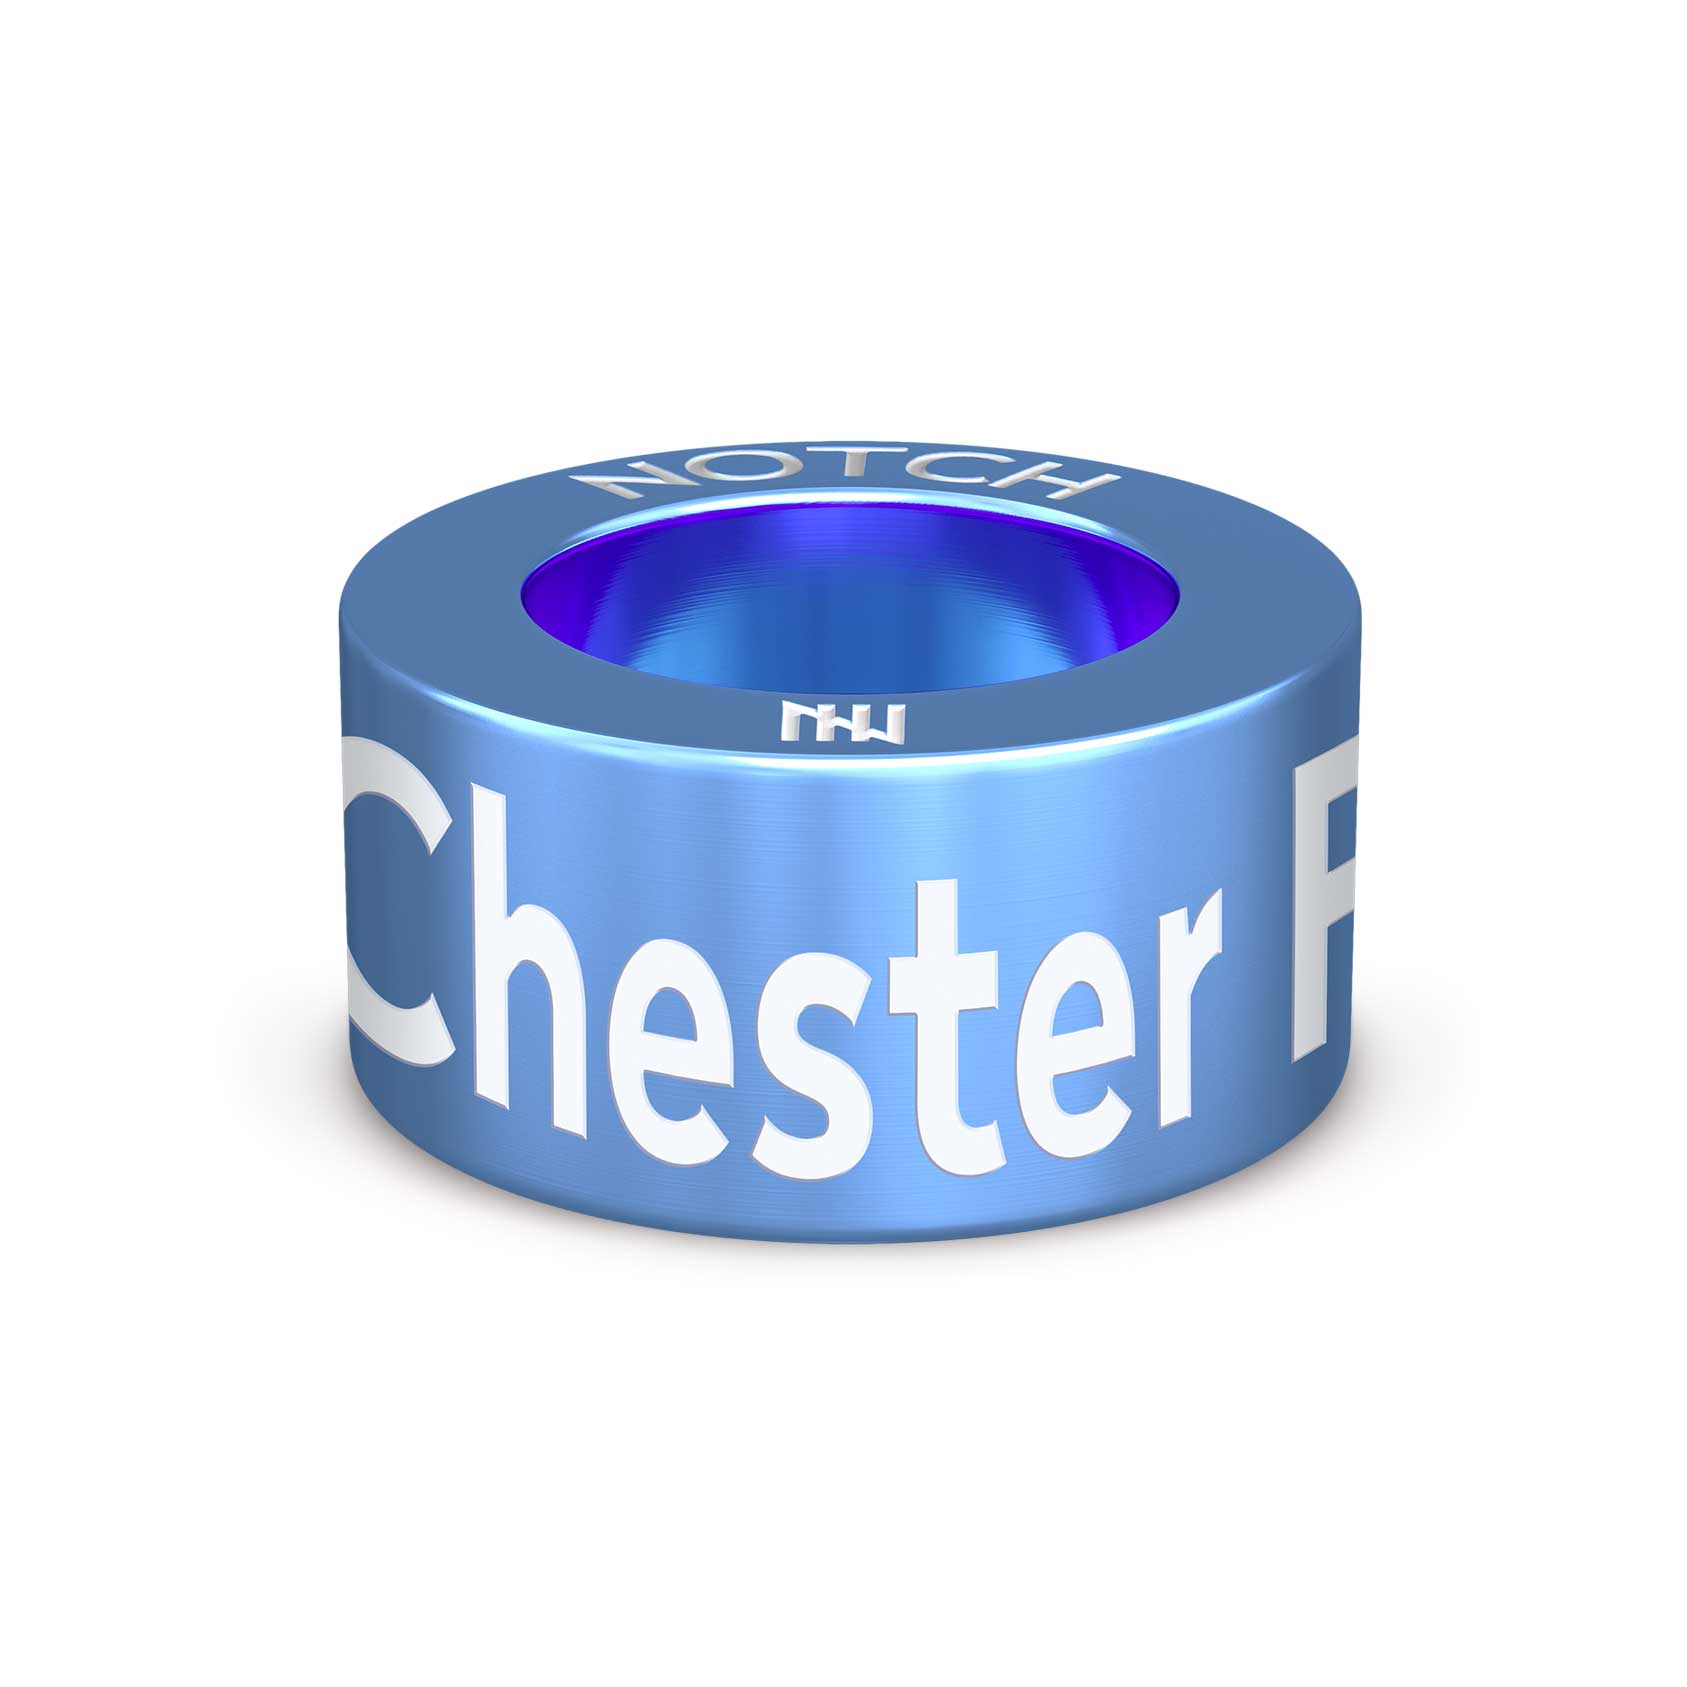 Chester Fun Run NOTCH Charm